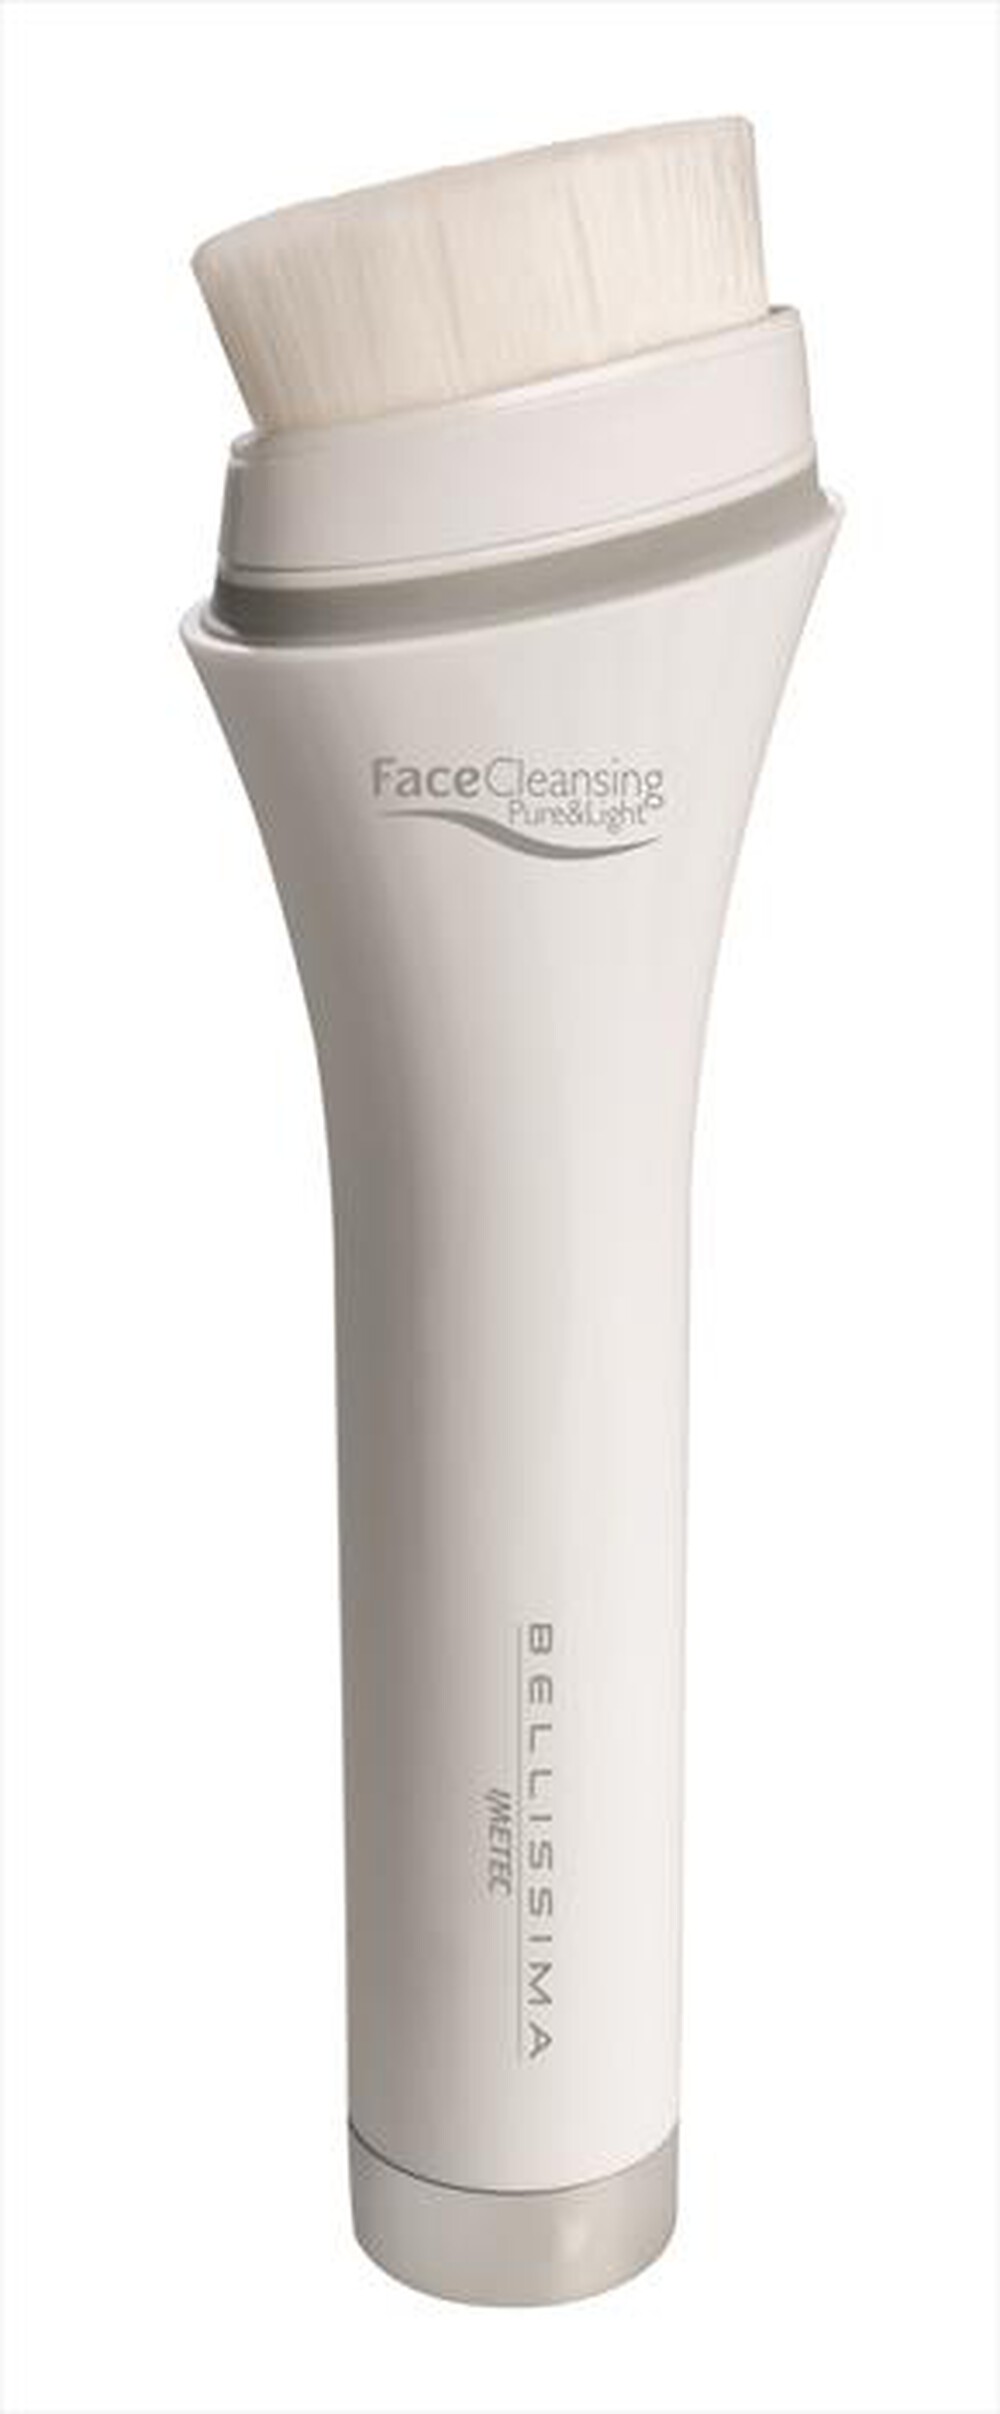 "BELLISSIMA IMETEC - Face Cleaning Pure Light-Bianco"